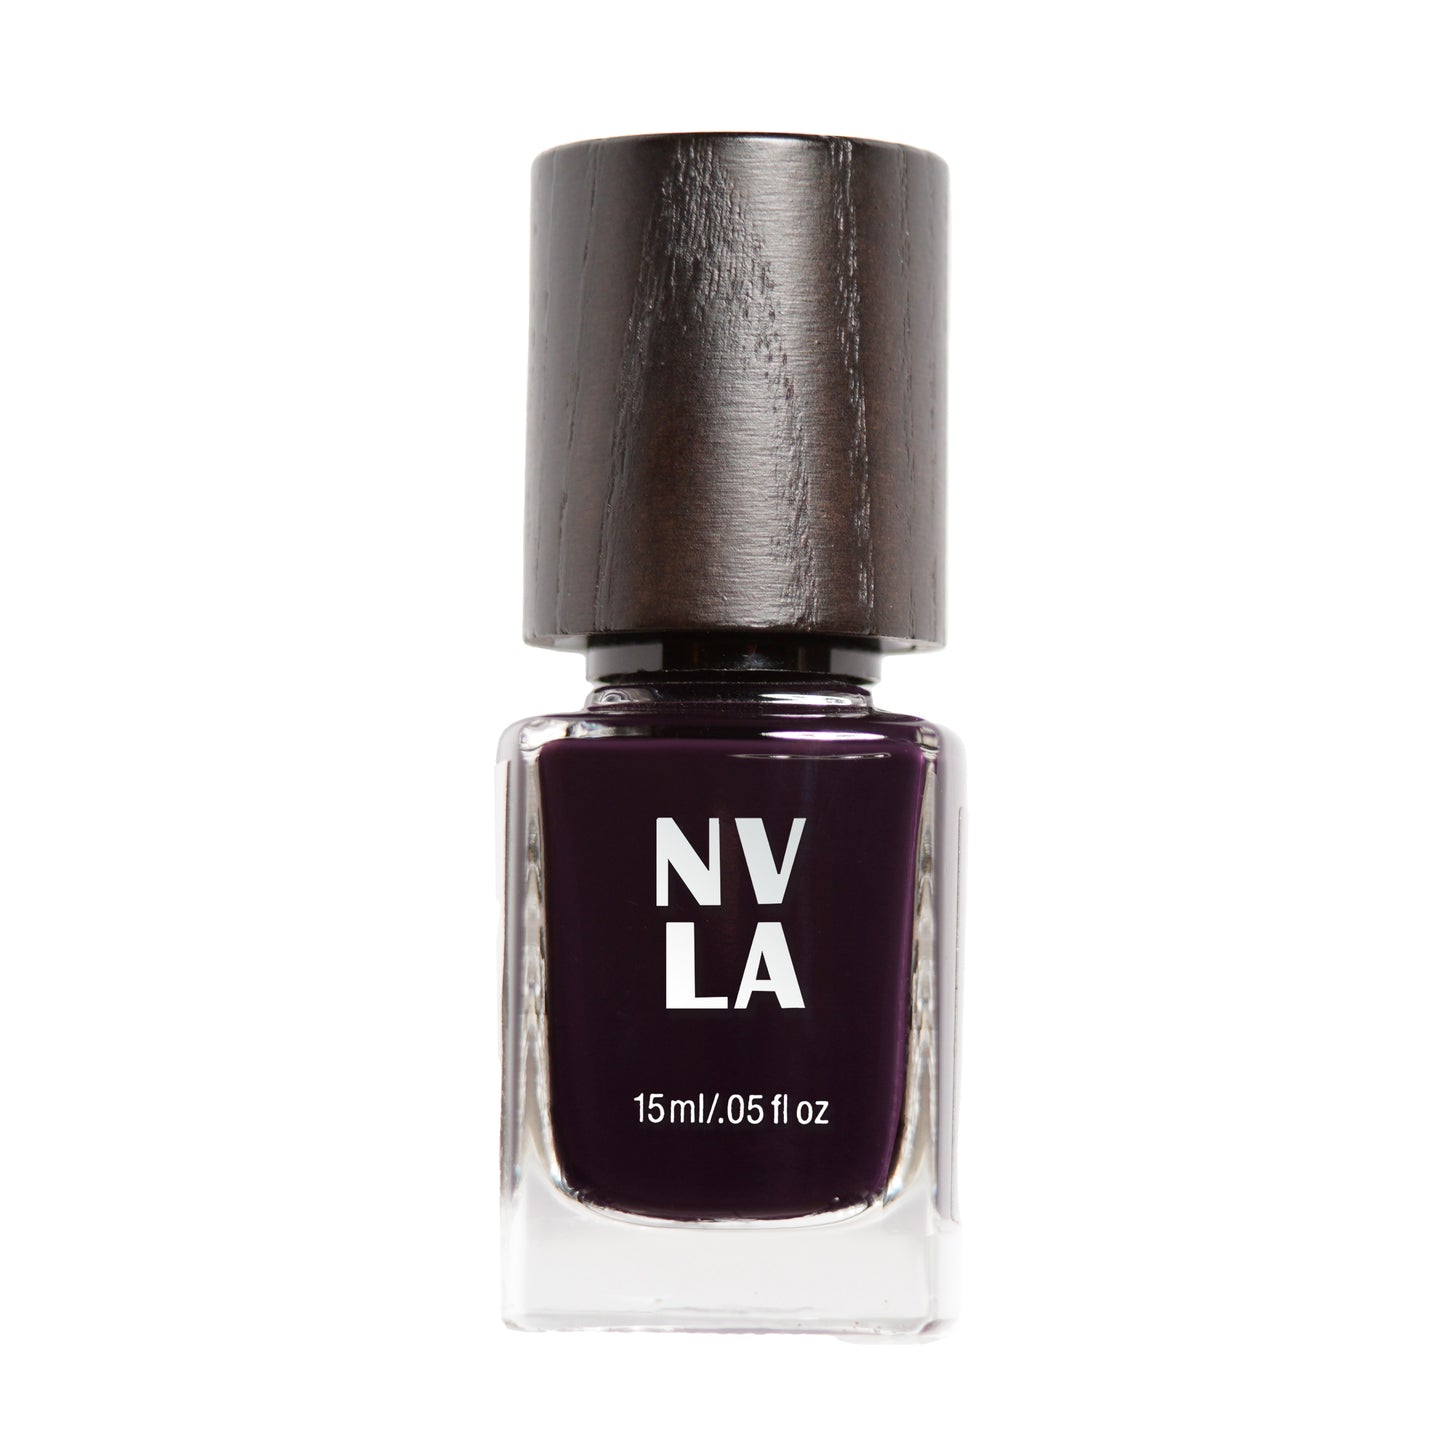 NVLA nail polish Perfect Image eggplant tone